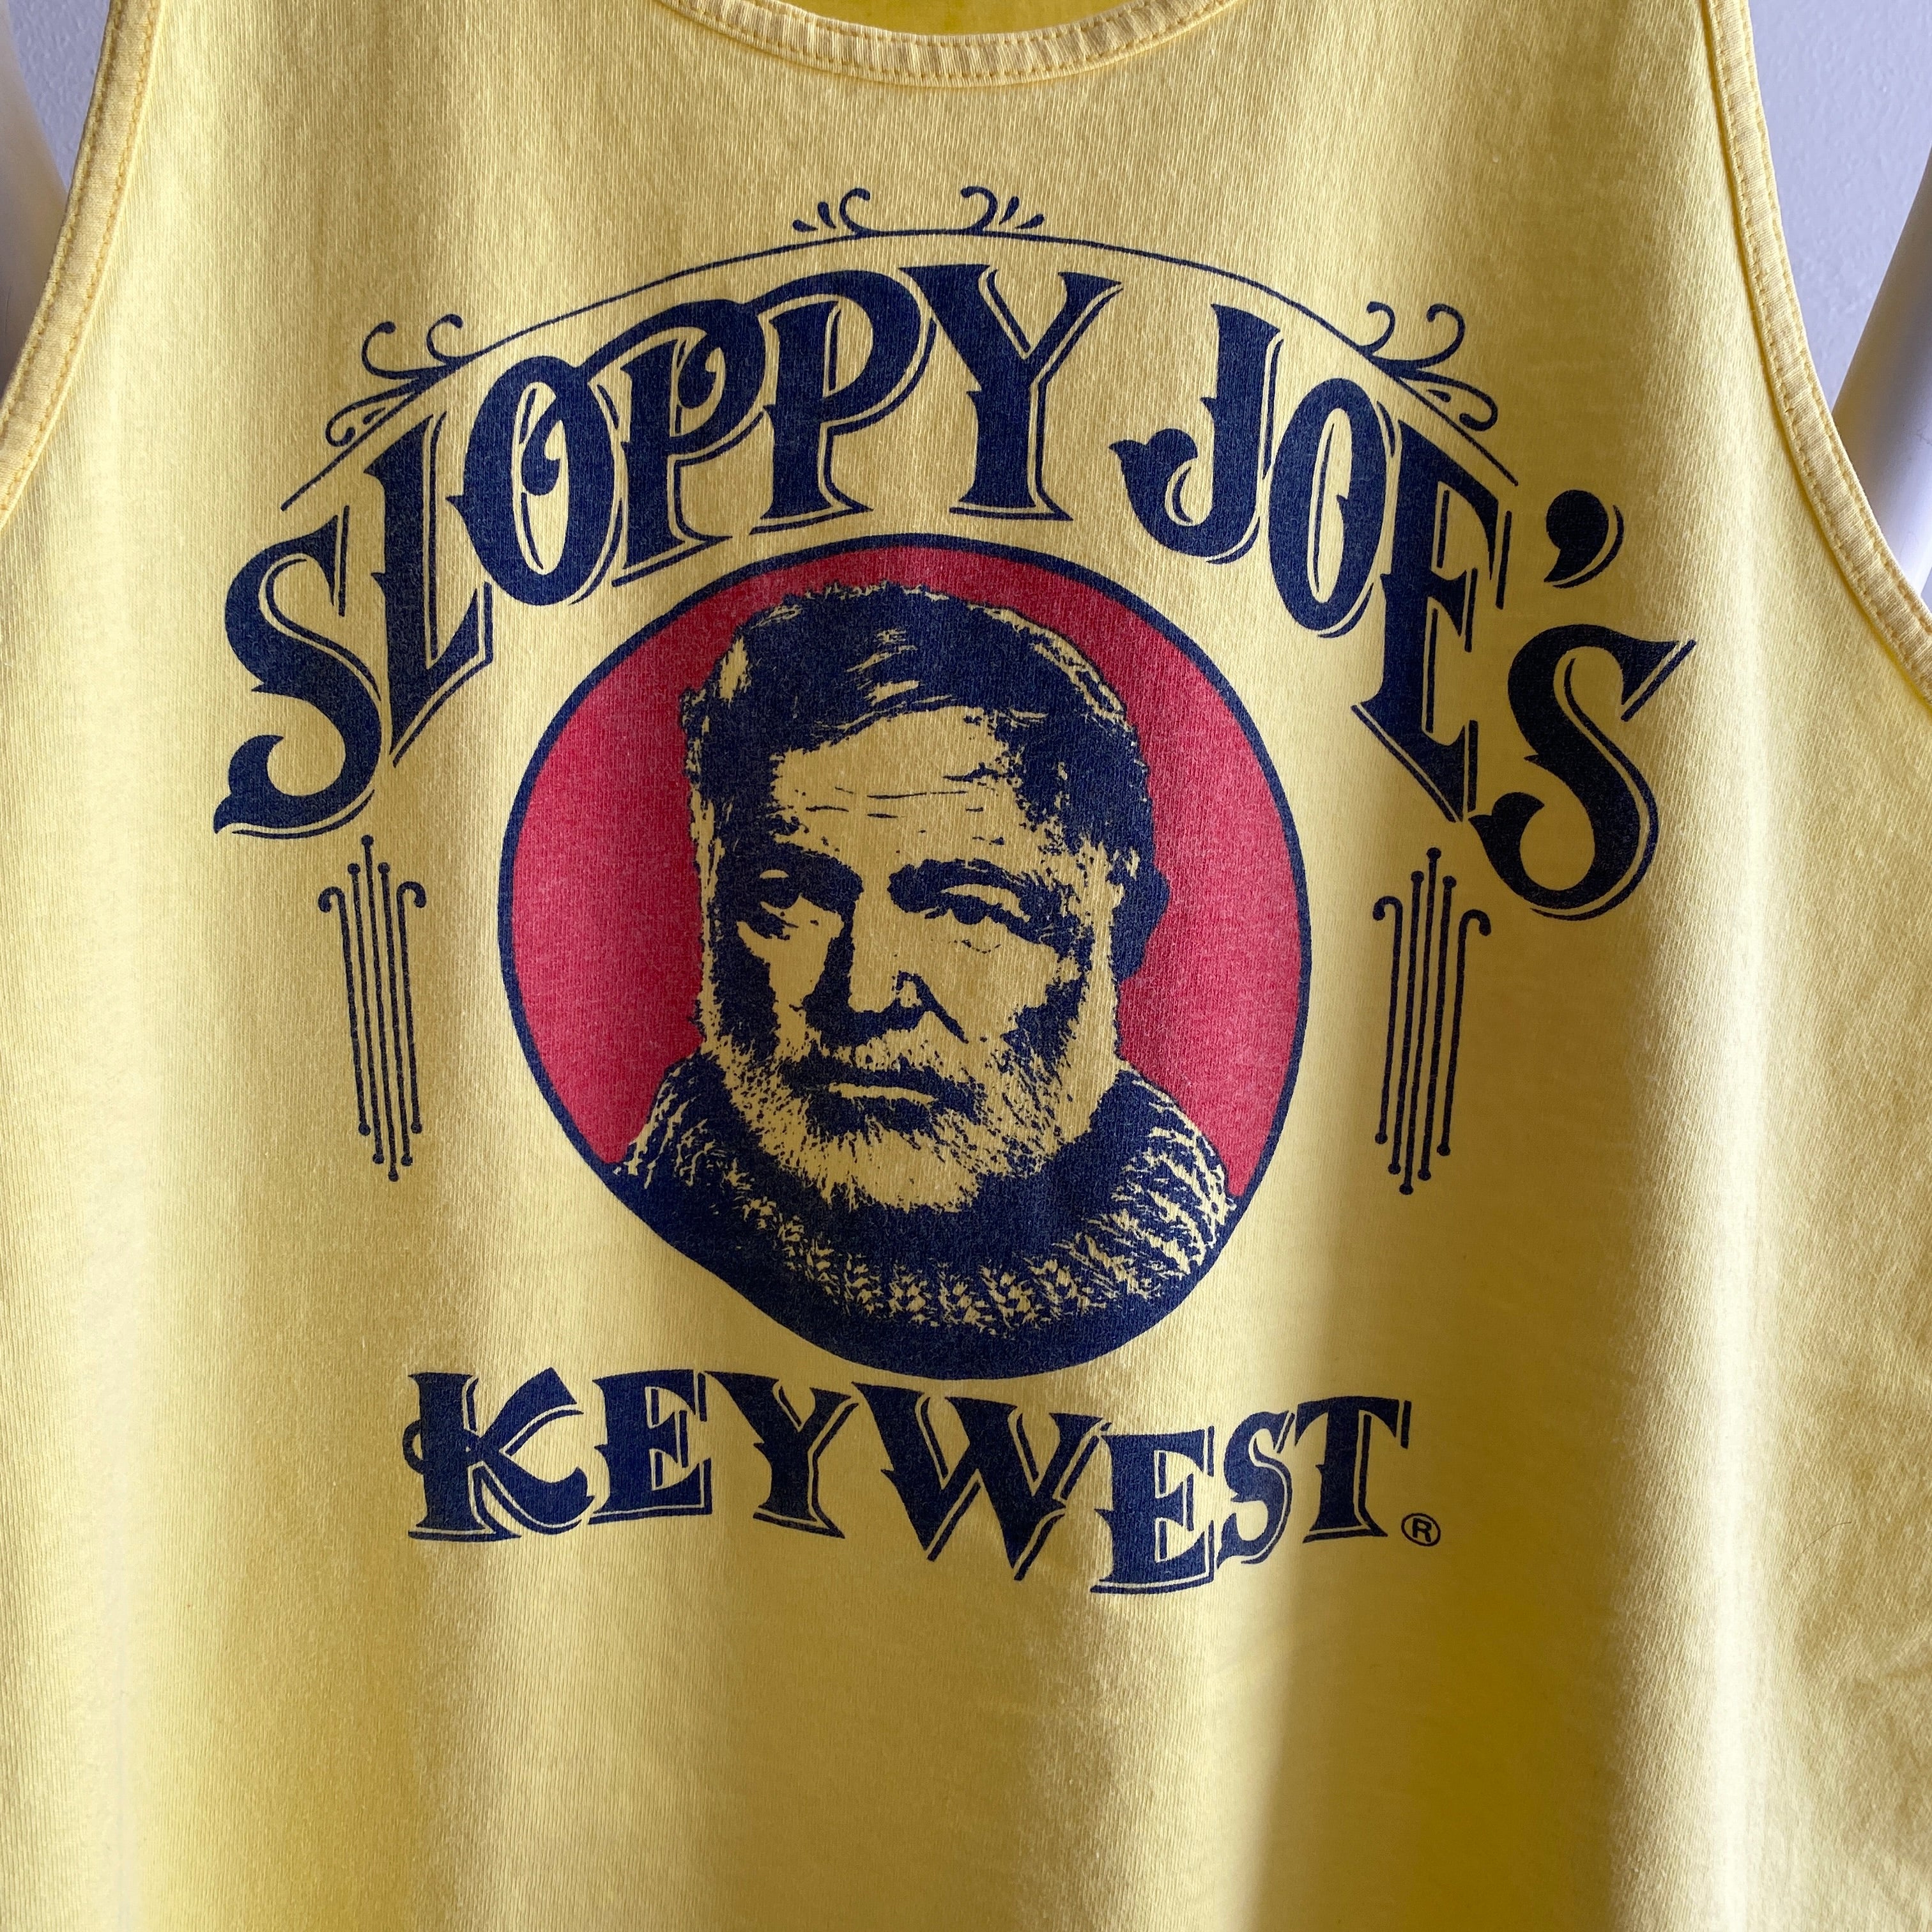 1990s Sloppy Joe's Key West Cotton Tank Top by Oneita